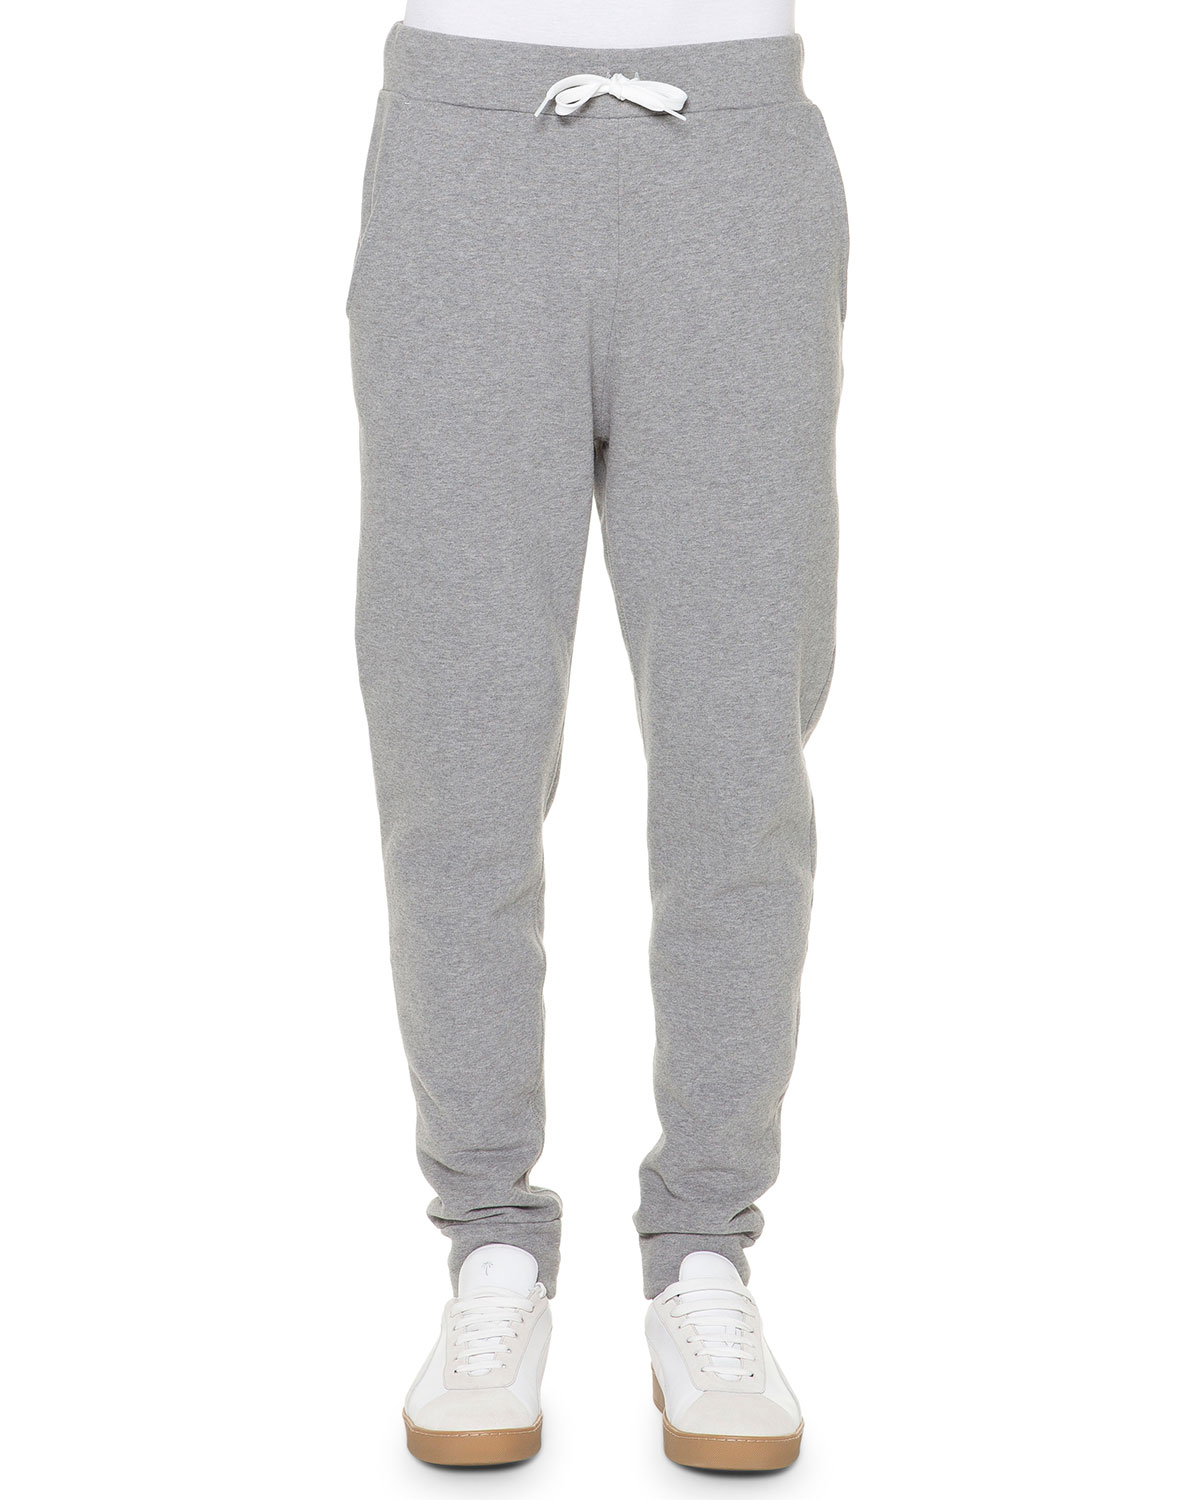 Lyst - Tomas Maier Lightweight Fleece Drawstring Sweatpants in Gray for Men